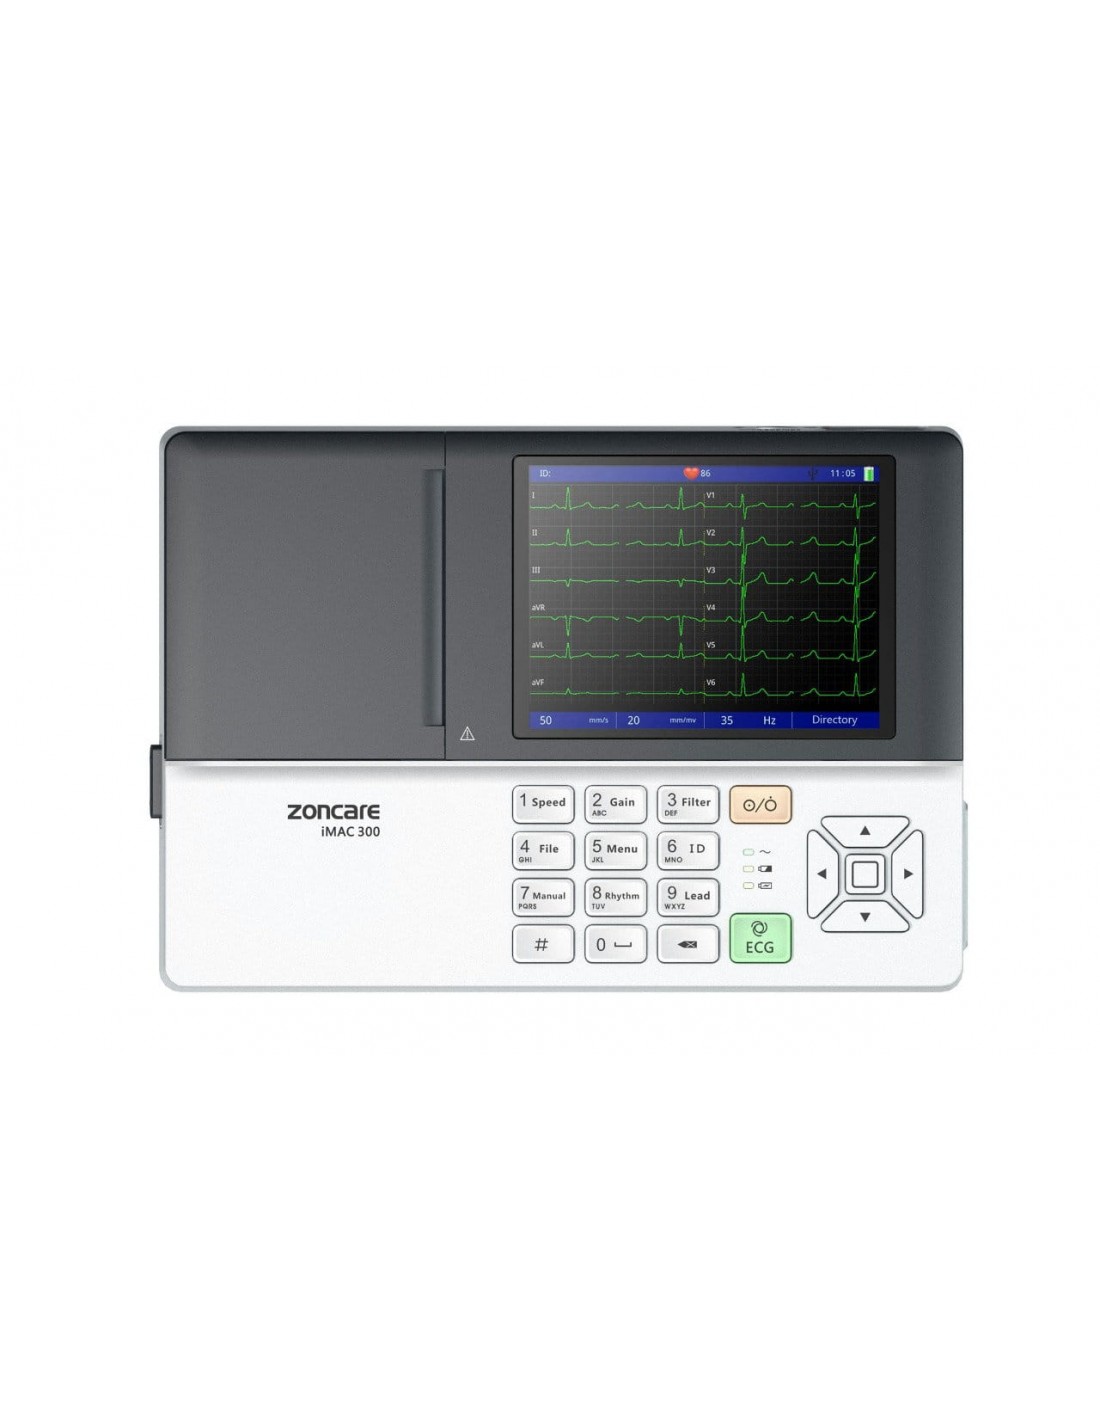 Moniteur ECG portable Gima Cardio-C 3 pistes - Medsquare